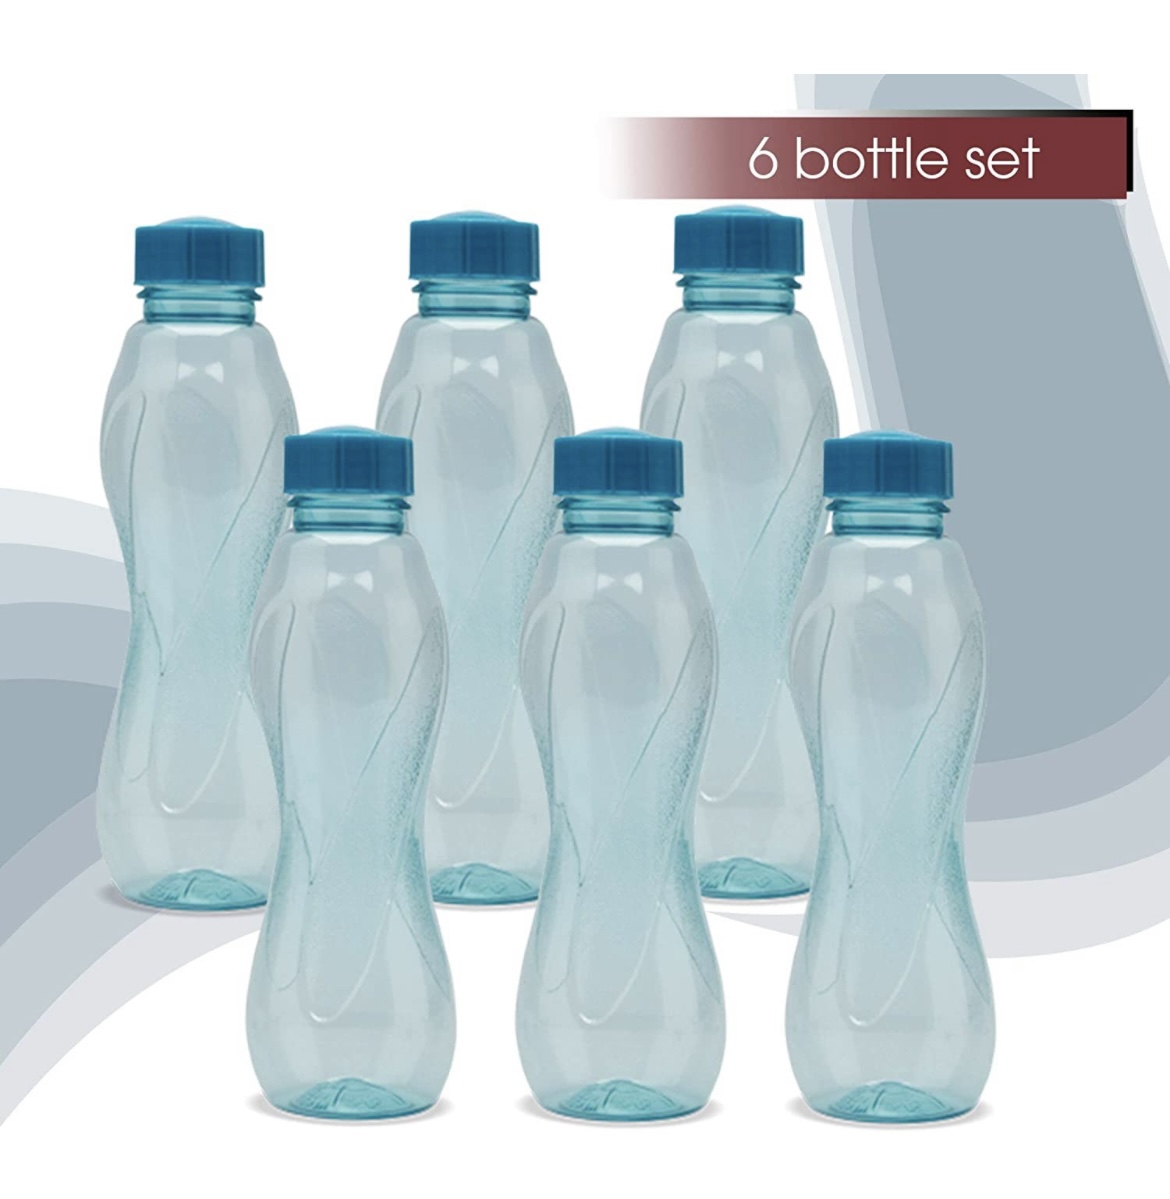 Milton set of six pet bottle 